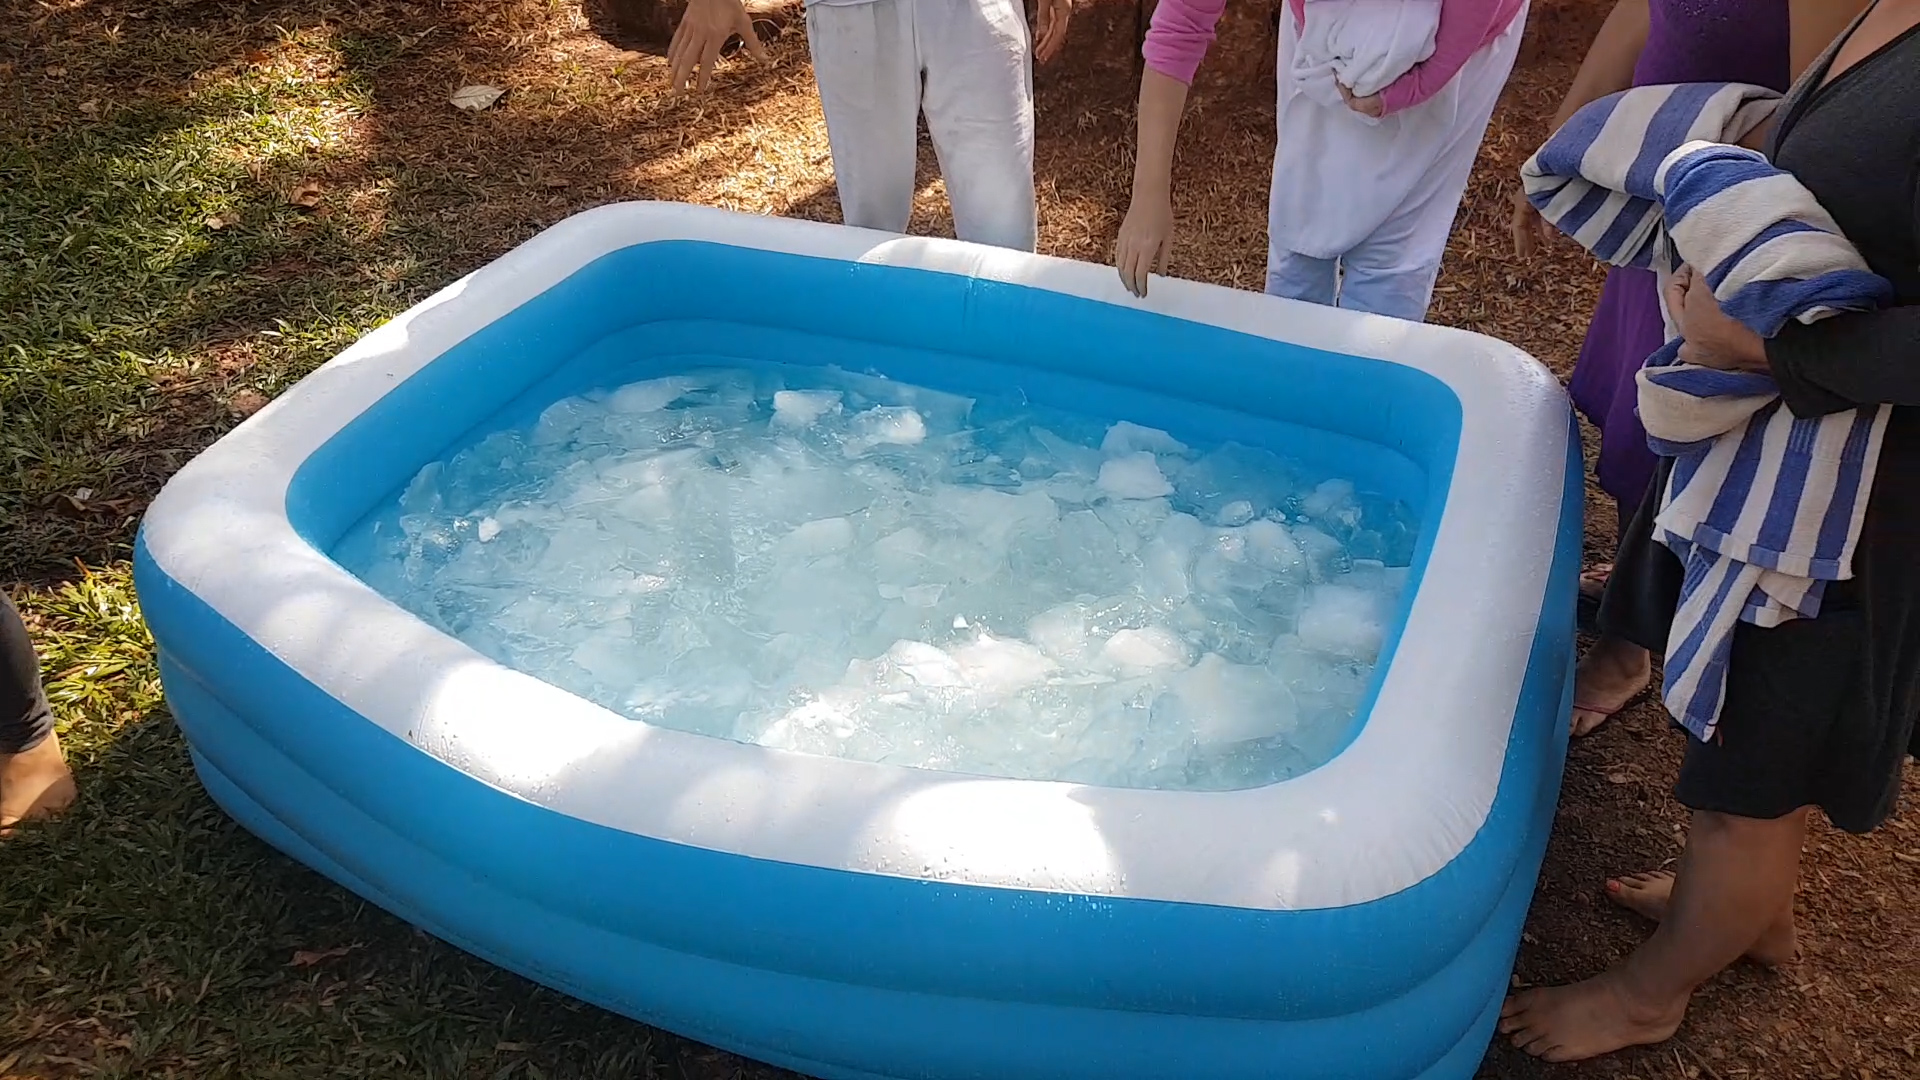 The ice bath we used for Wim Hof breathing